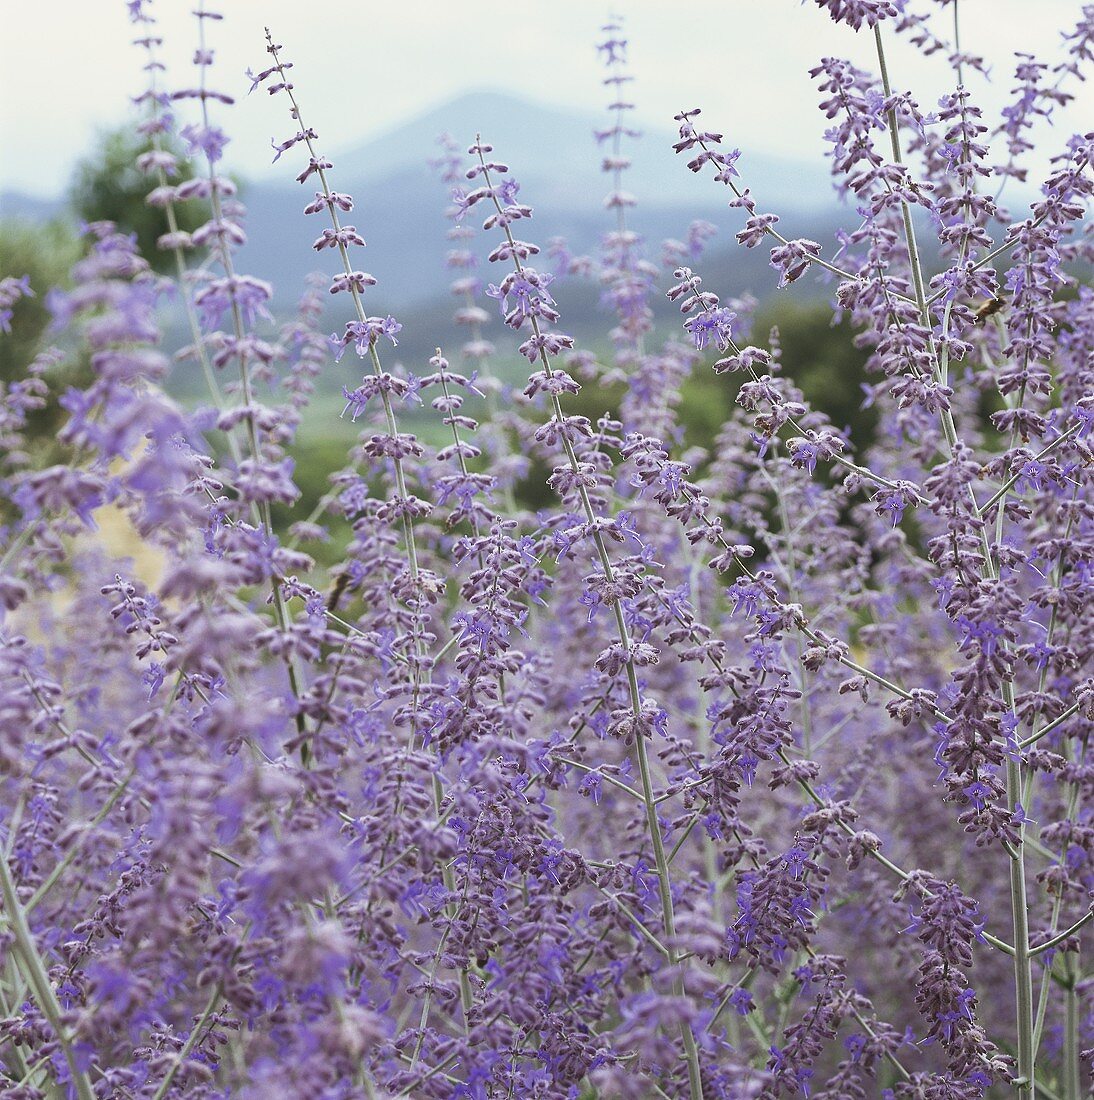 Lavender flowers in open air